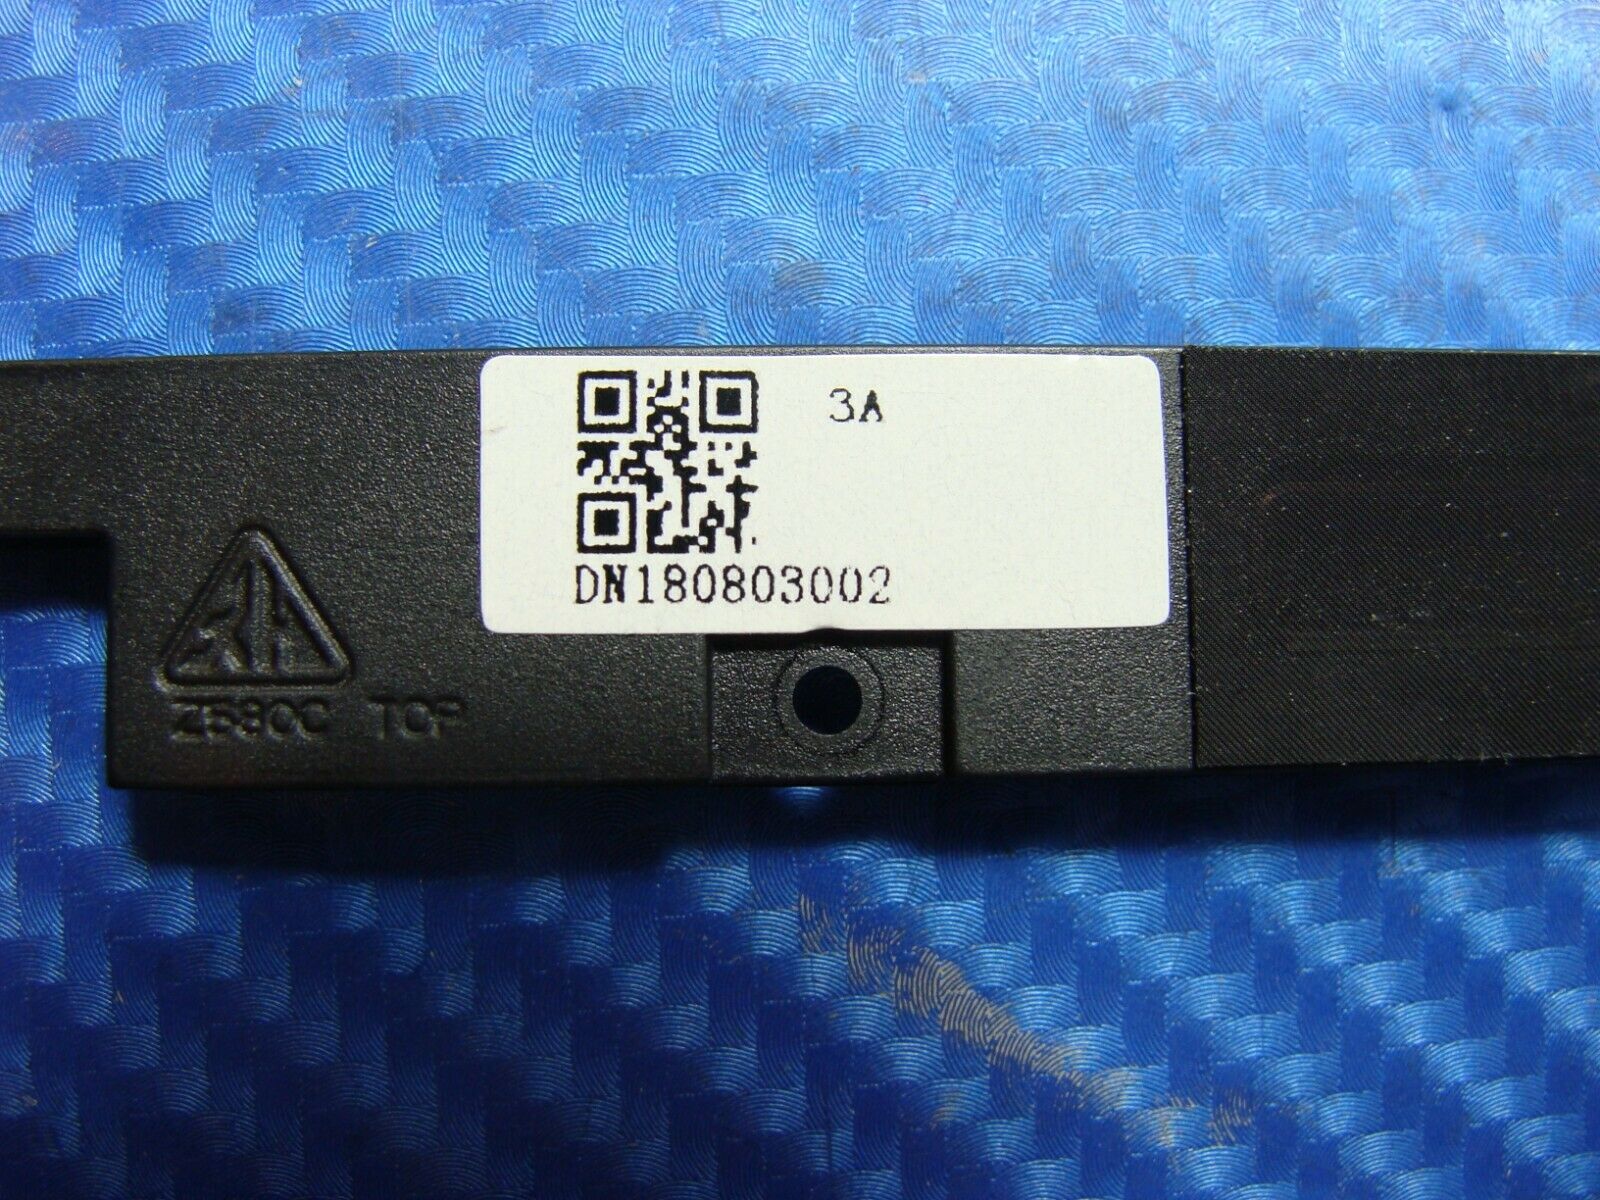 Asus ZenPad S 8 Z580C 8